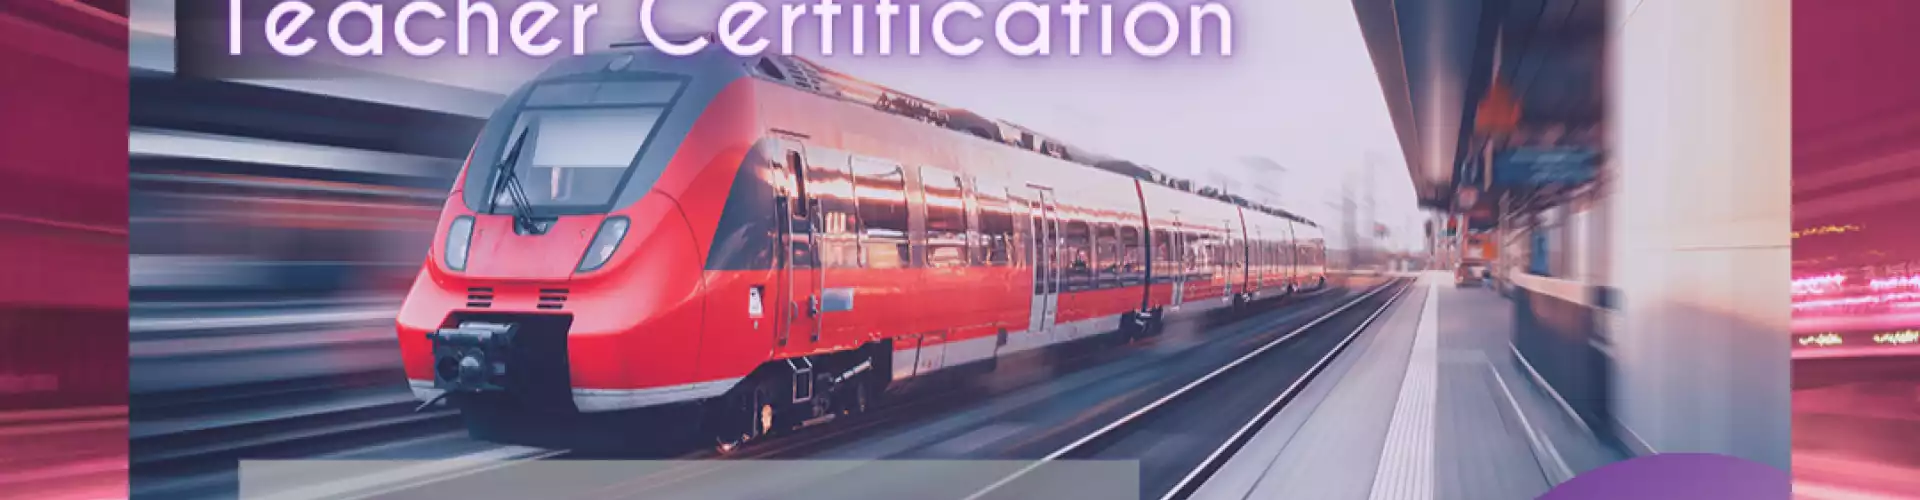 Fast Track Teacher Training Practitioner Certification